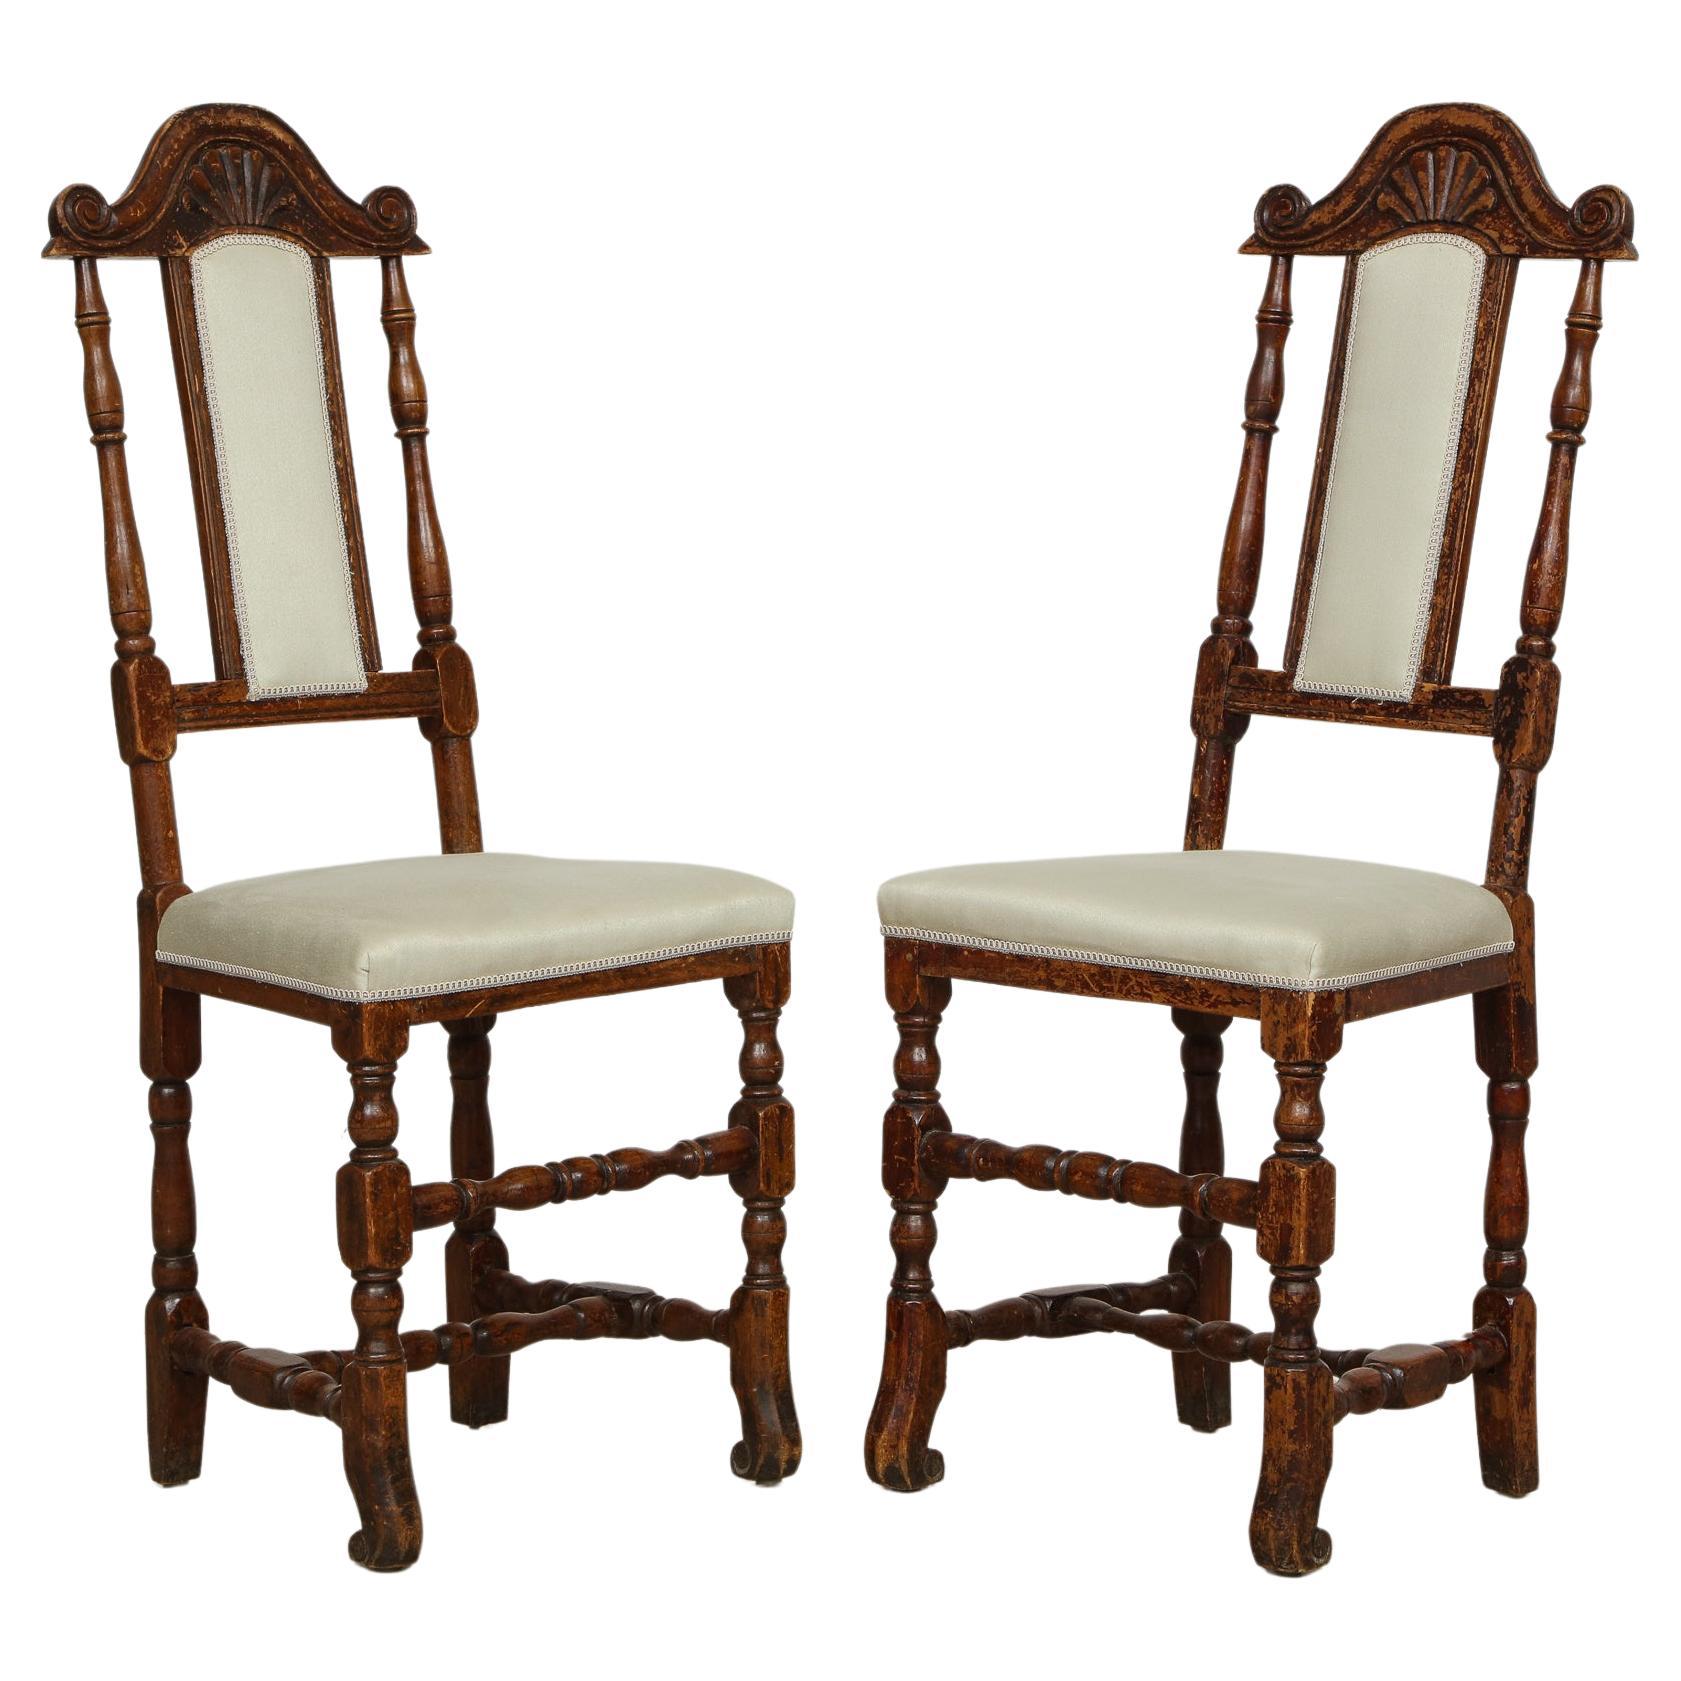 Pair of Late Baroque Swedish Chairs, Origin, Sweden, Circa 1750-1760